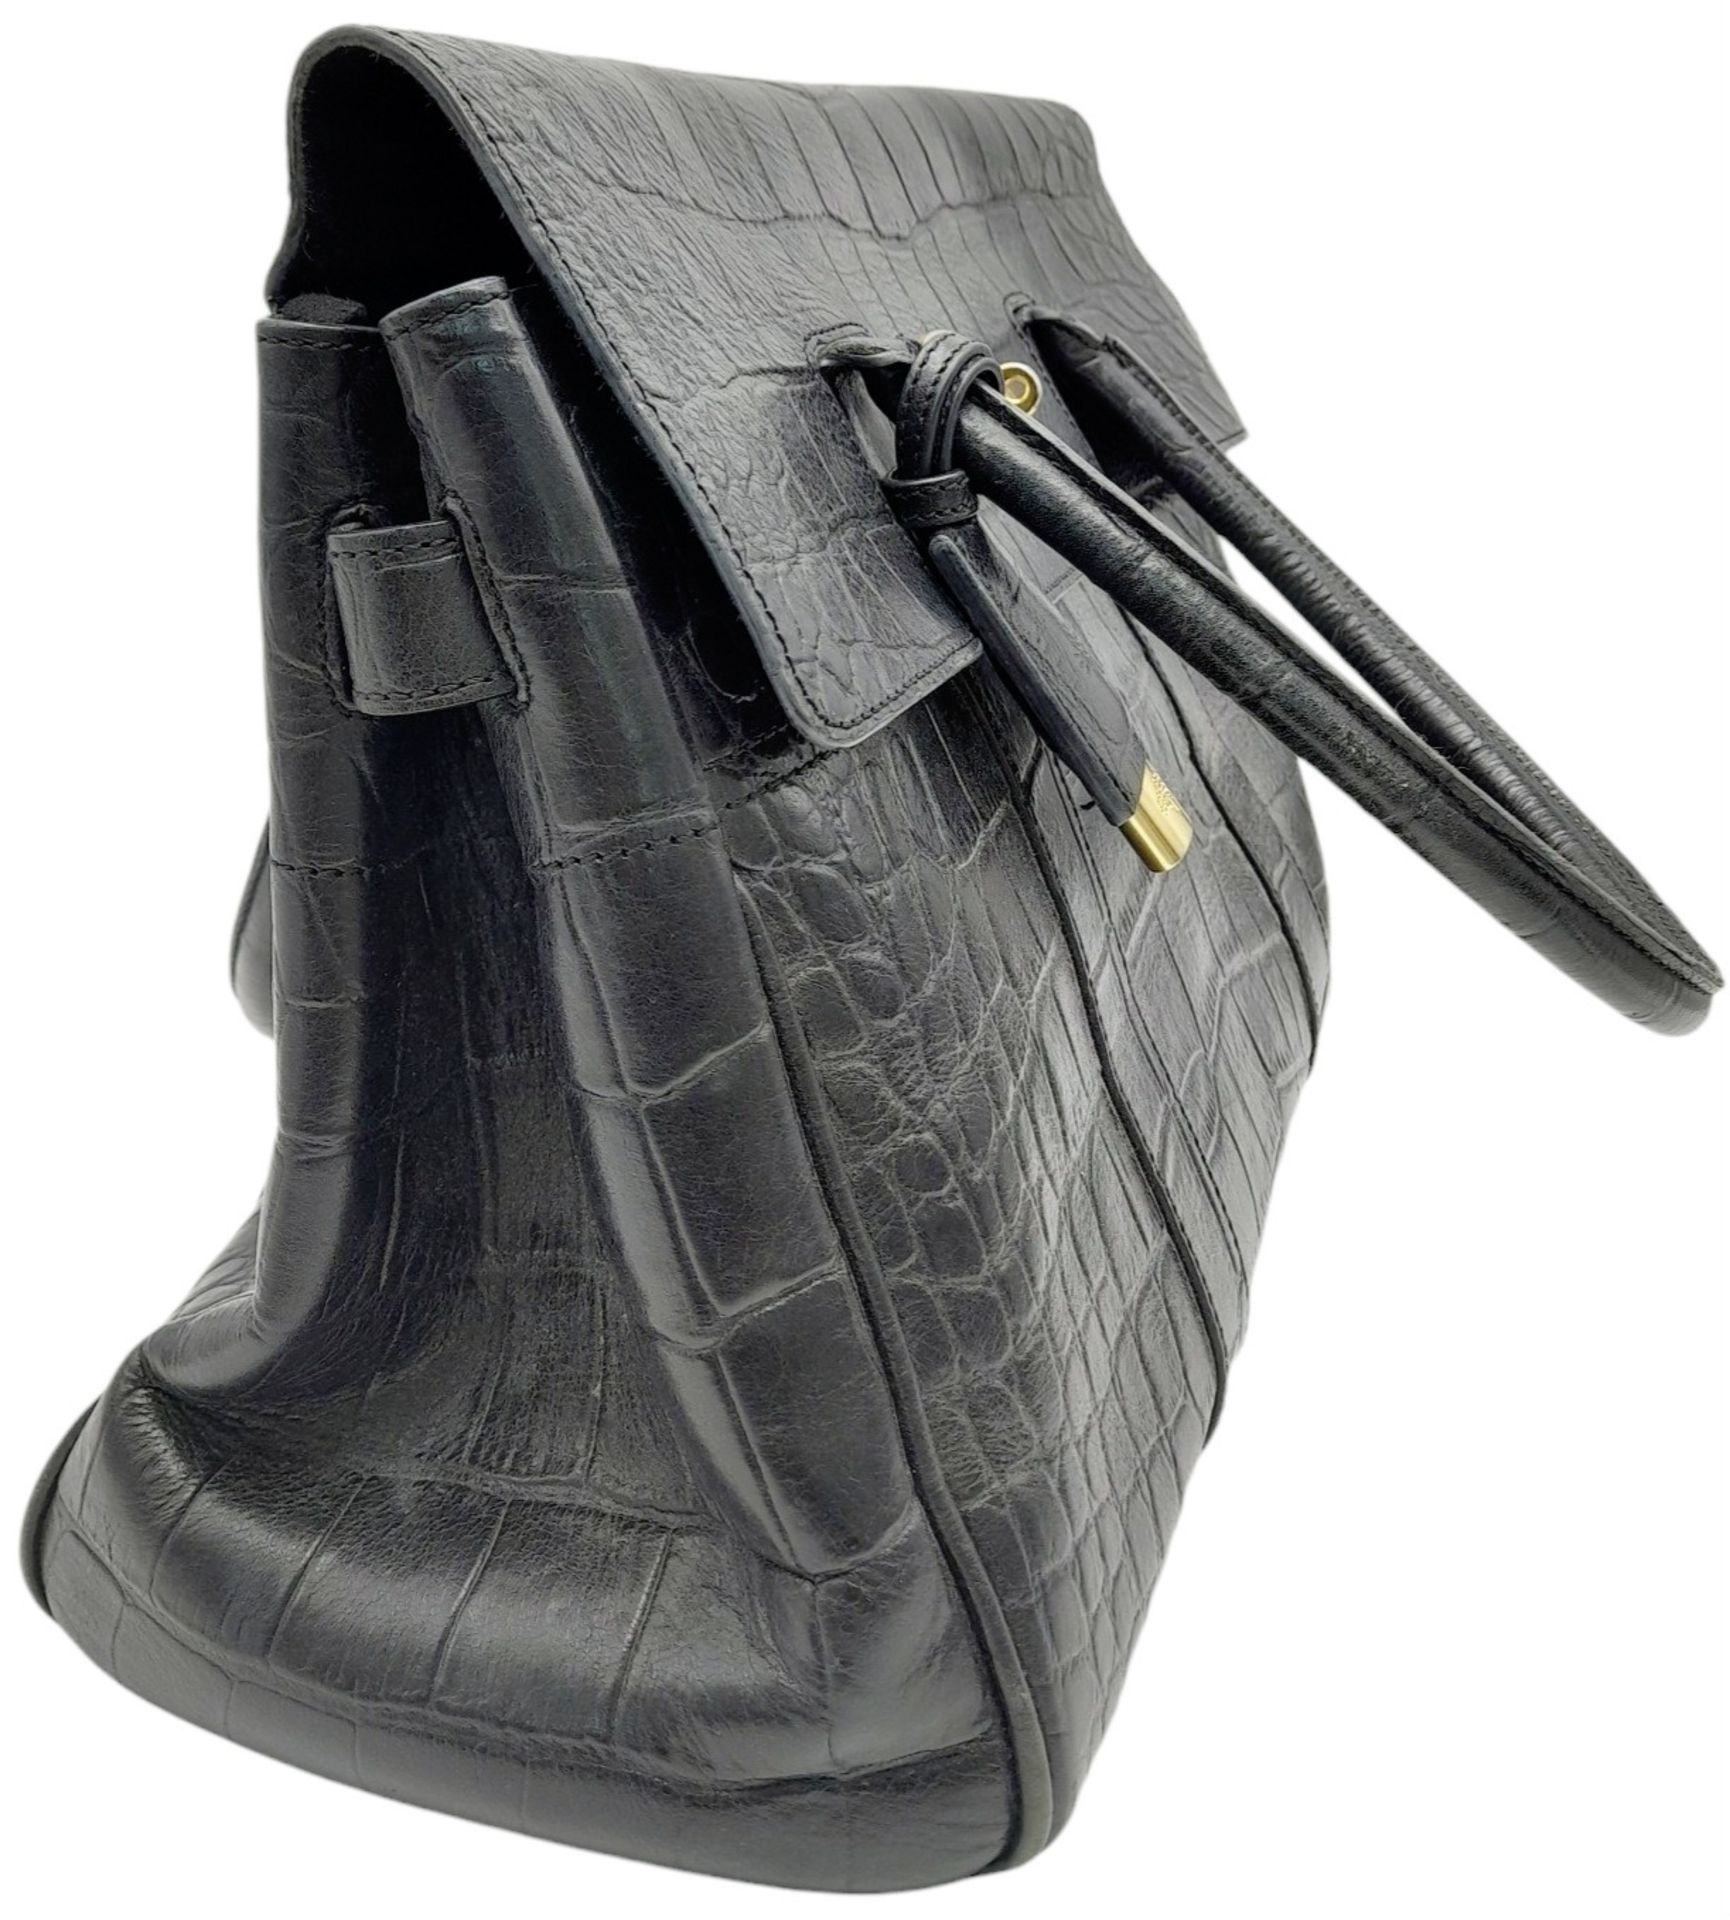 A Mulberry Bayswater Handbag. Black Croc Embossed Leather exterior, gold-tone hardware, a clochette, - Bild 2 aus 7